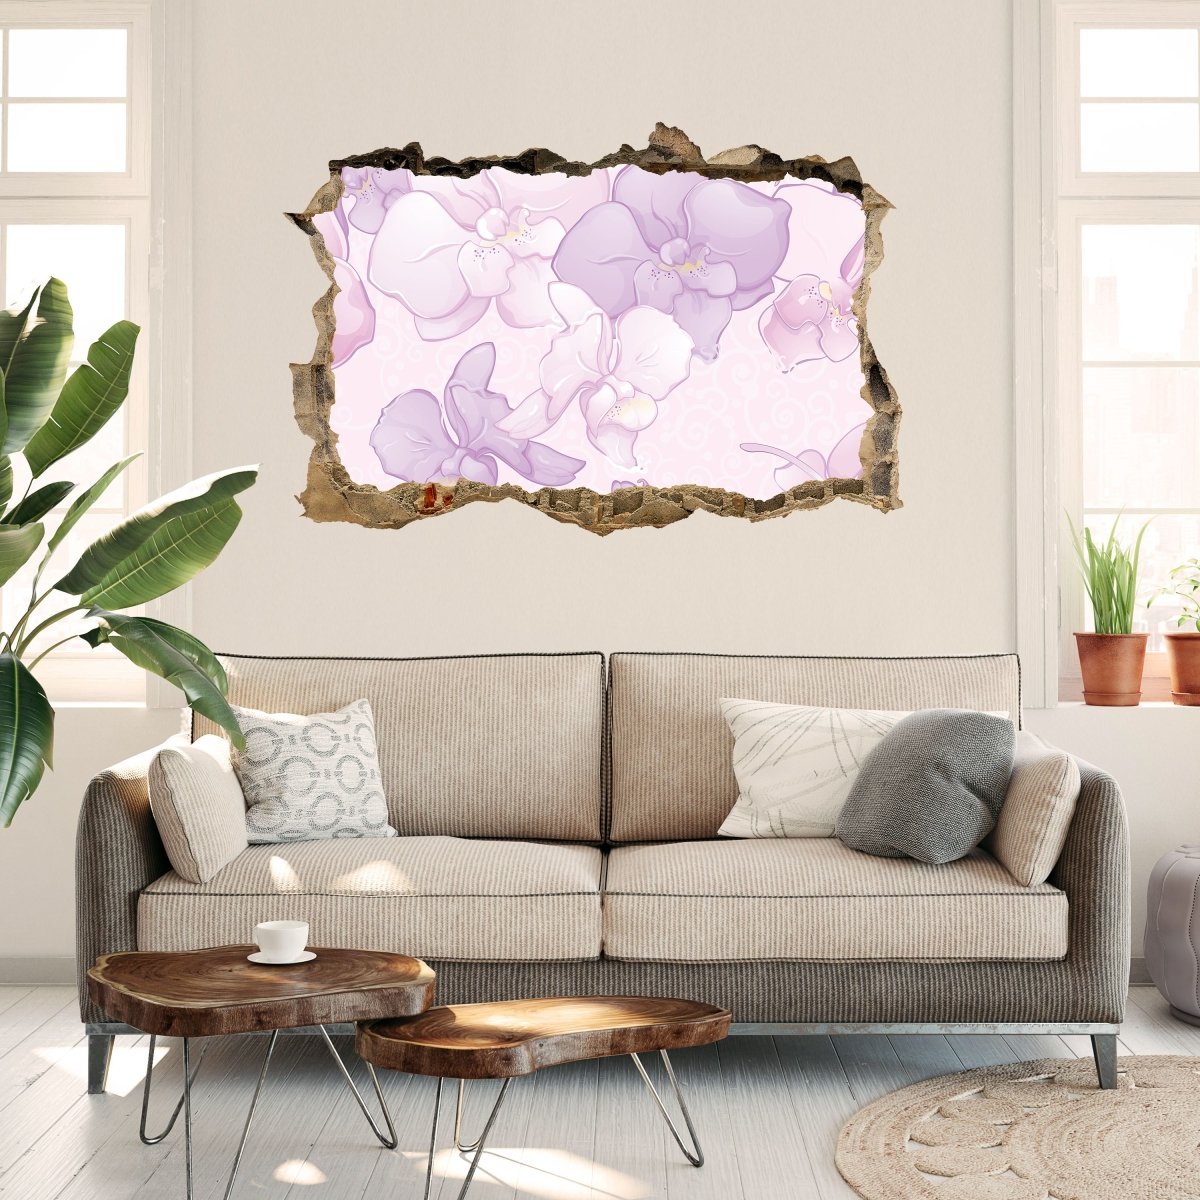 3D Wall Sticker Elegant Floral Motif - Wall Decal M0998